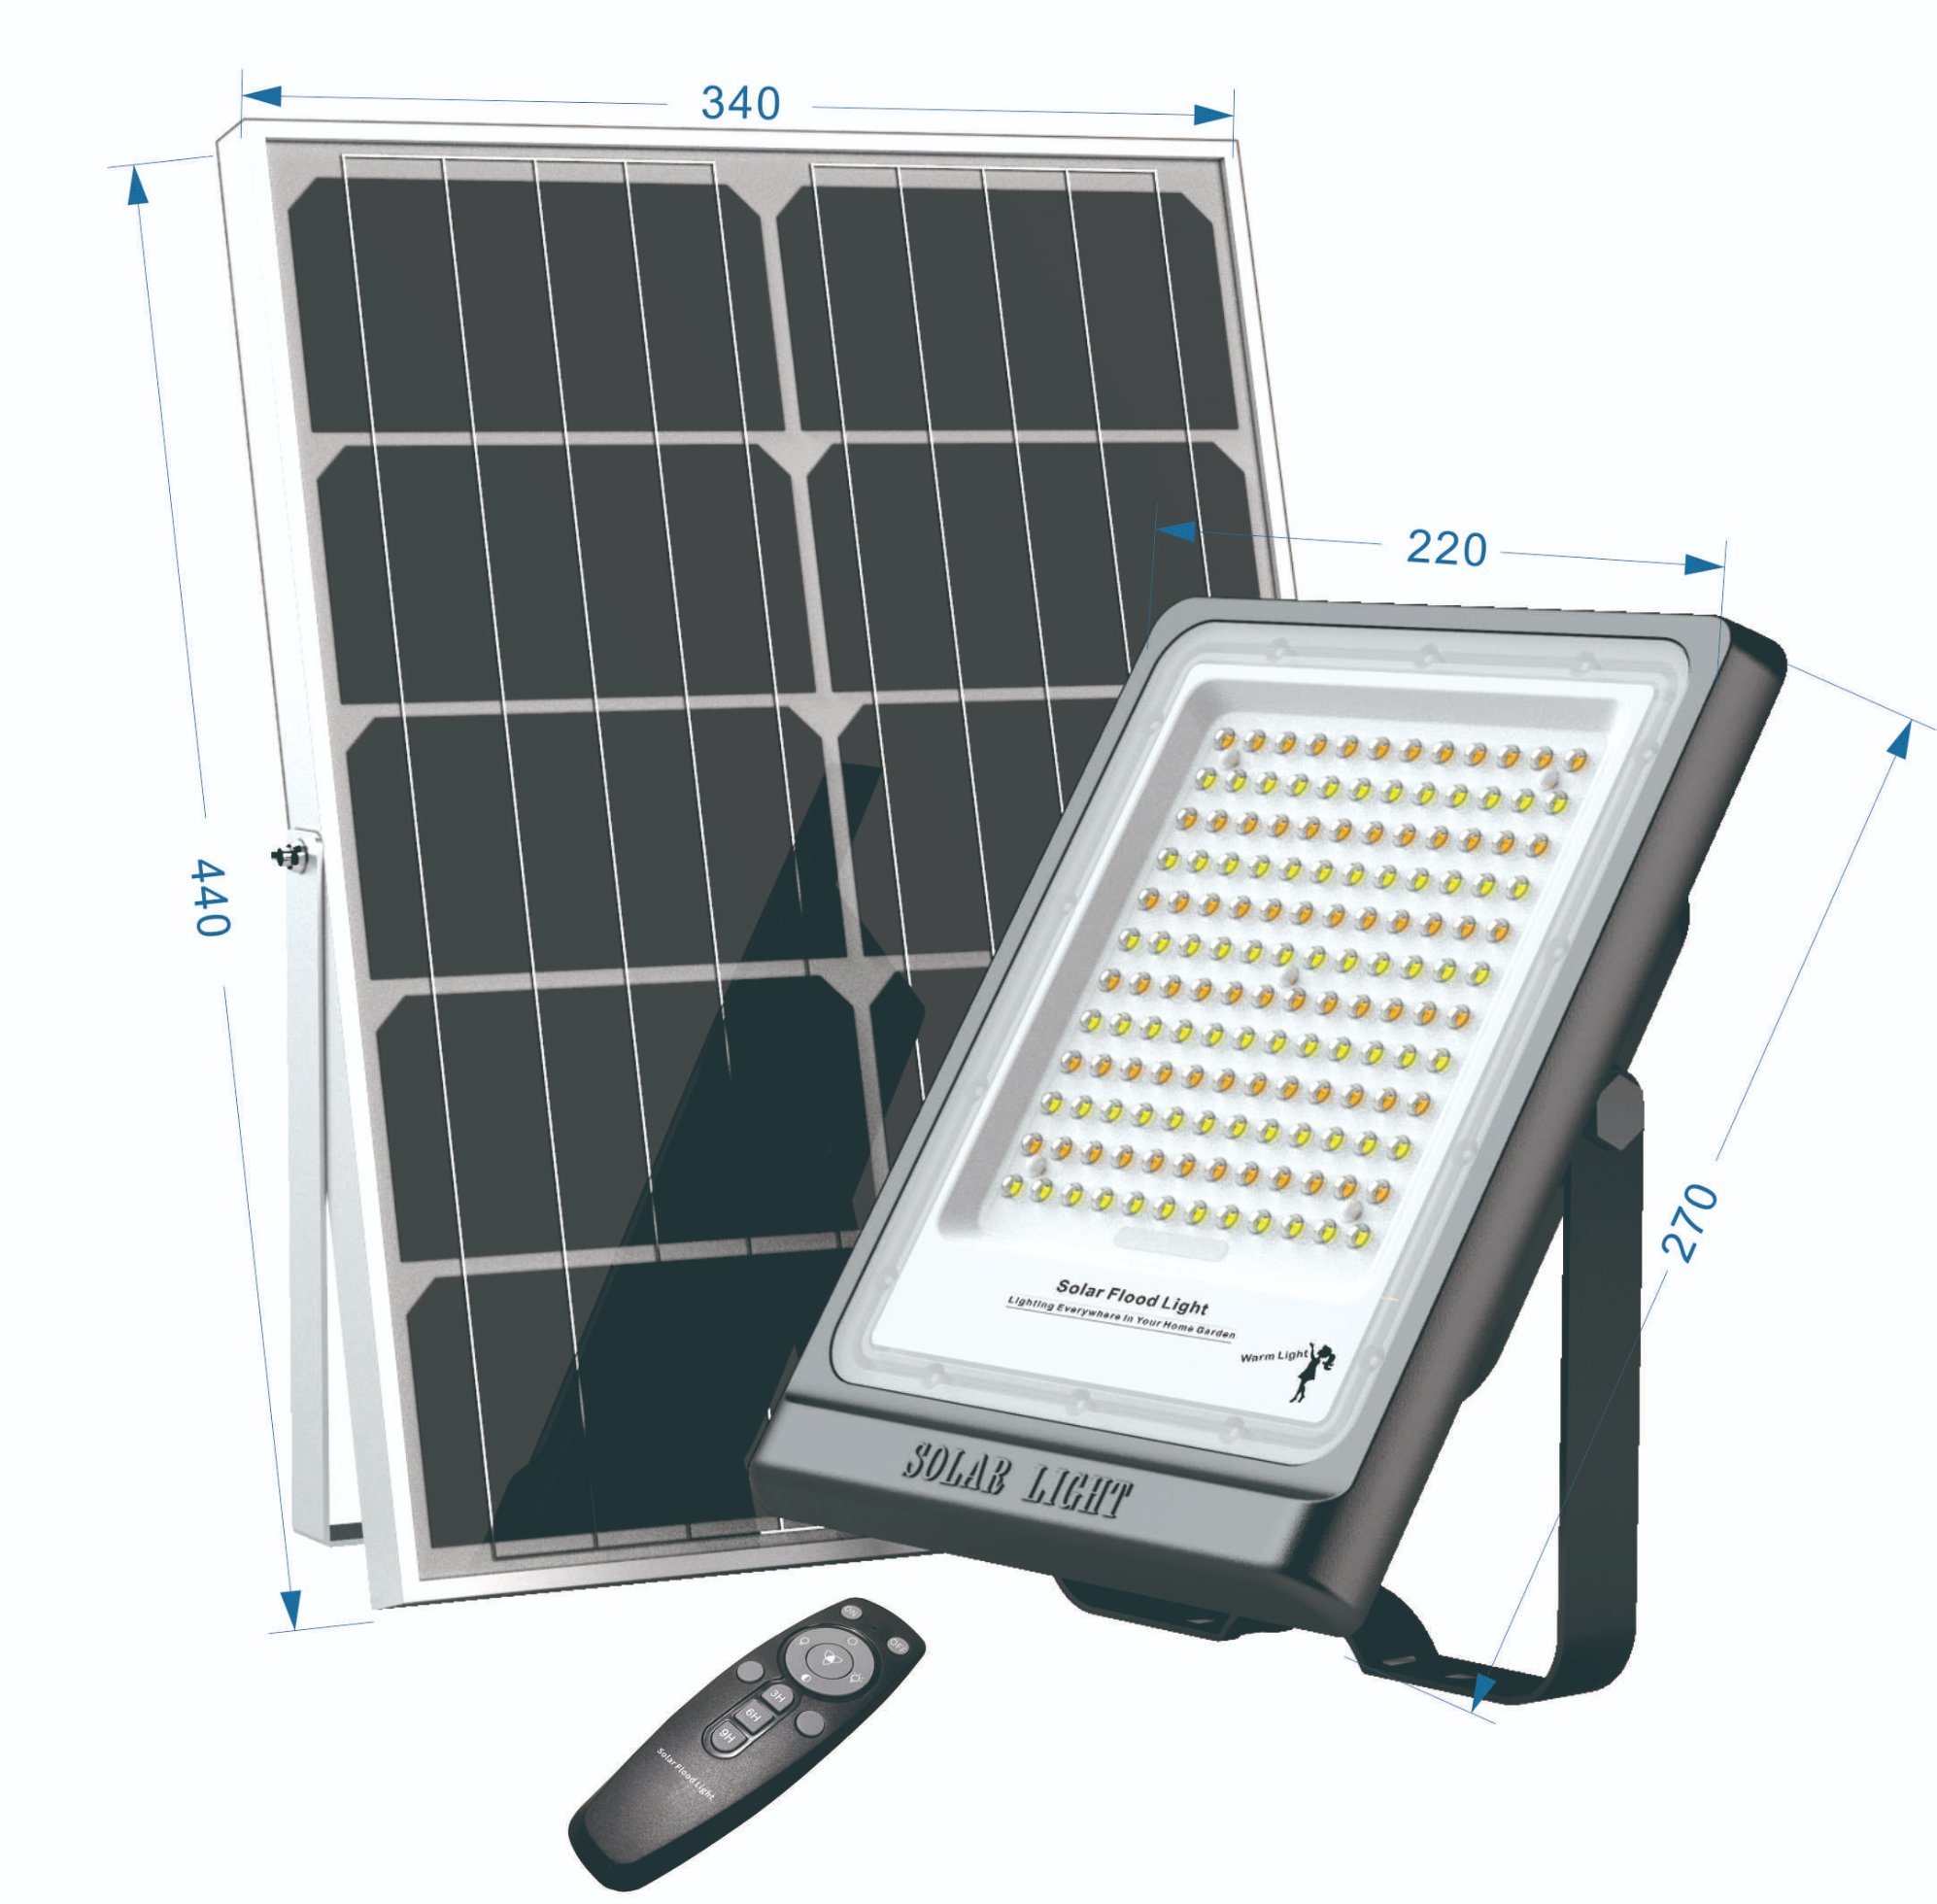 Outdoor Solar Square Light / Solar LED Light / Solar High Luminous LED Flood Light 100W-200W